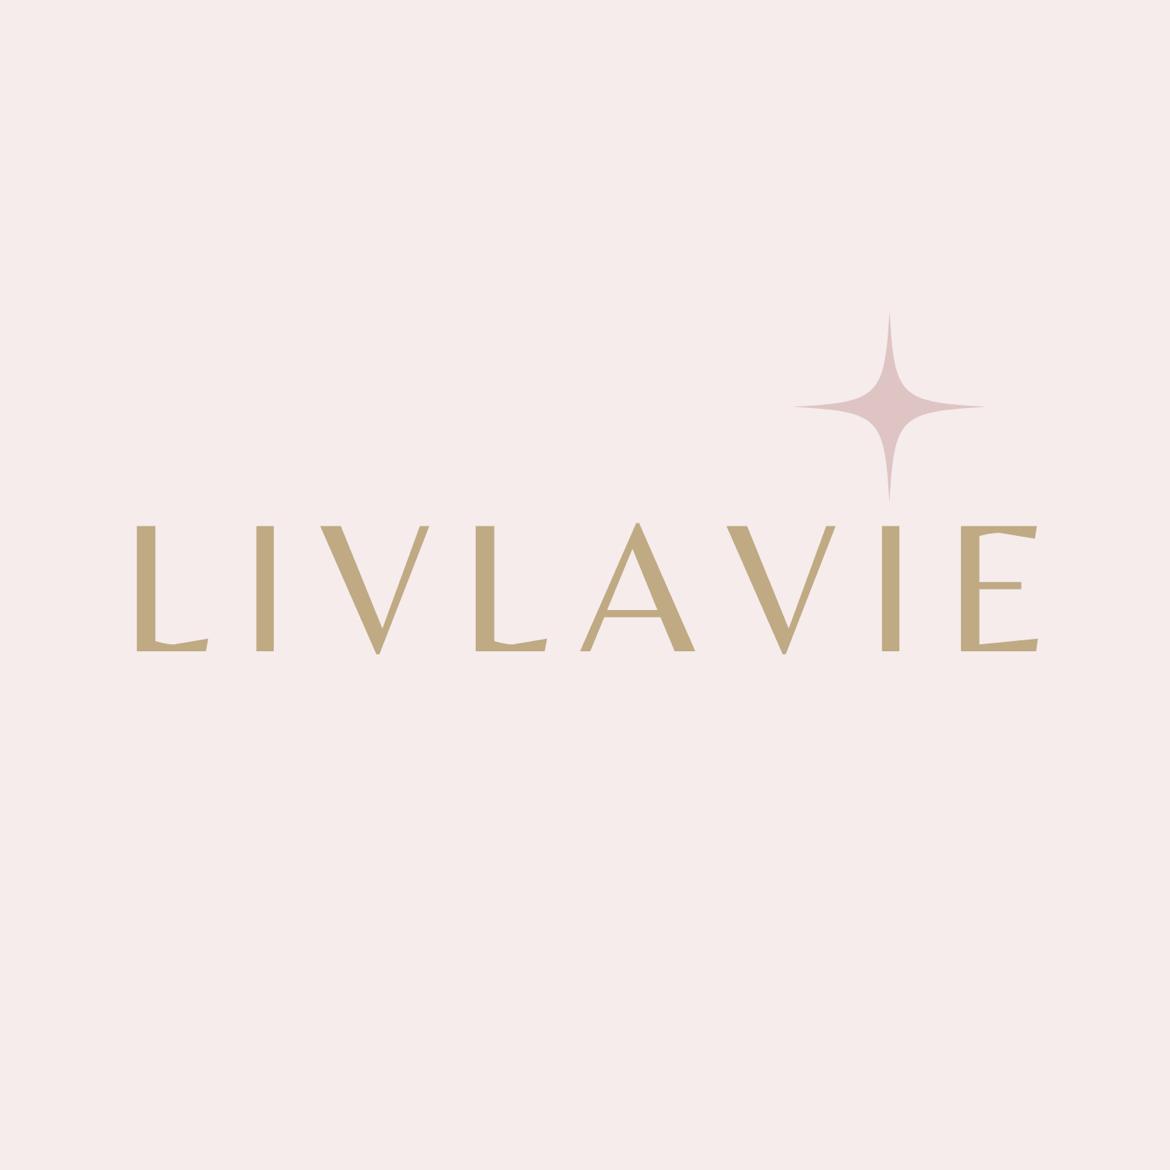 Livlavie's images